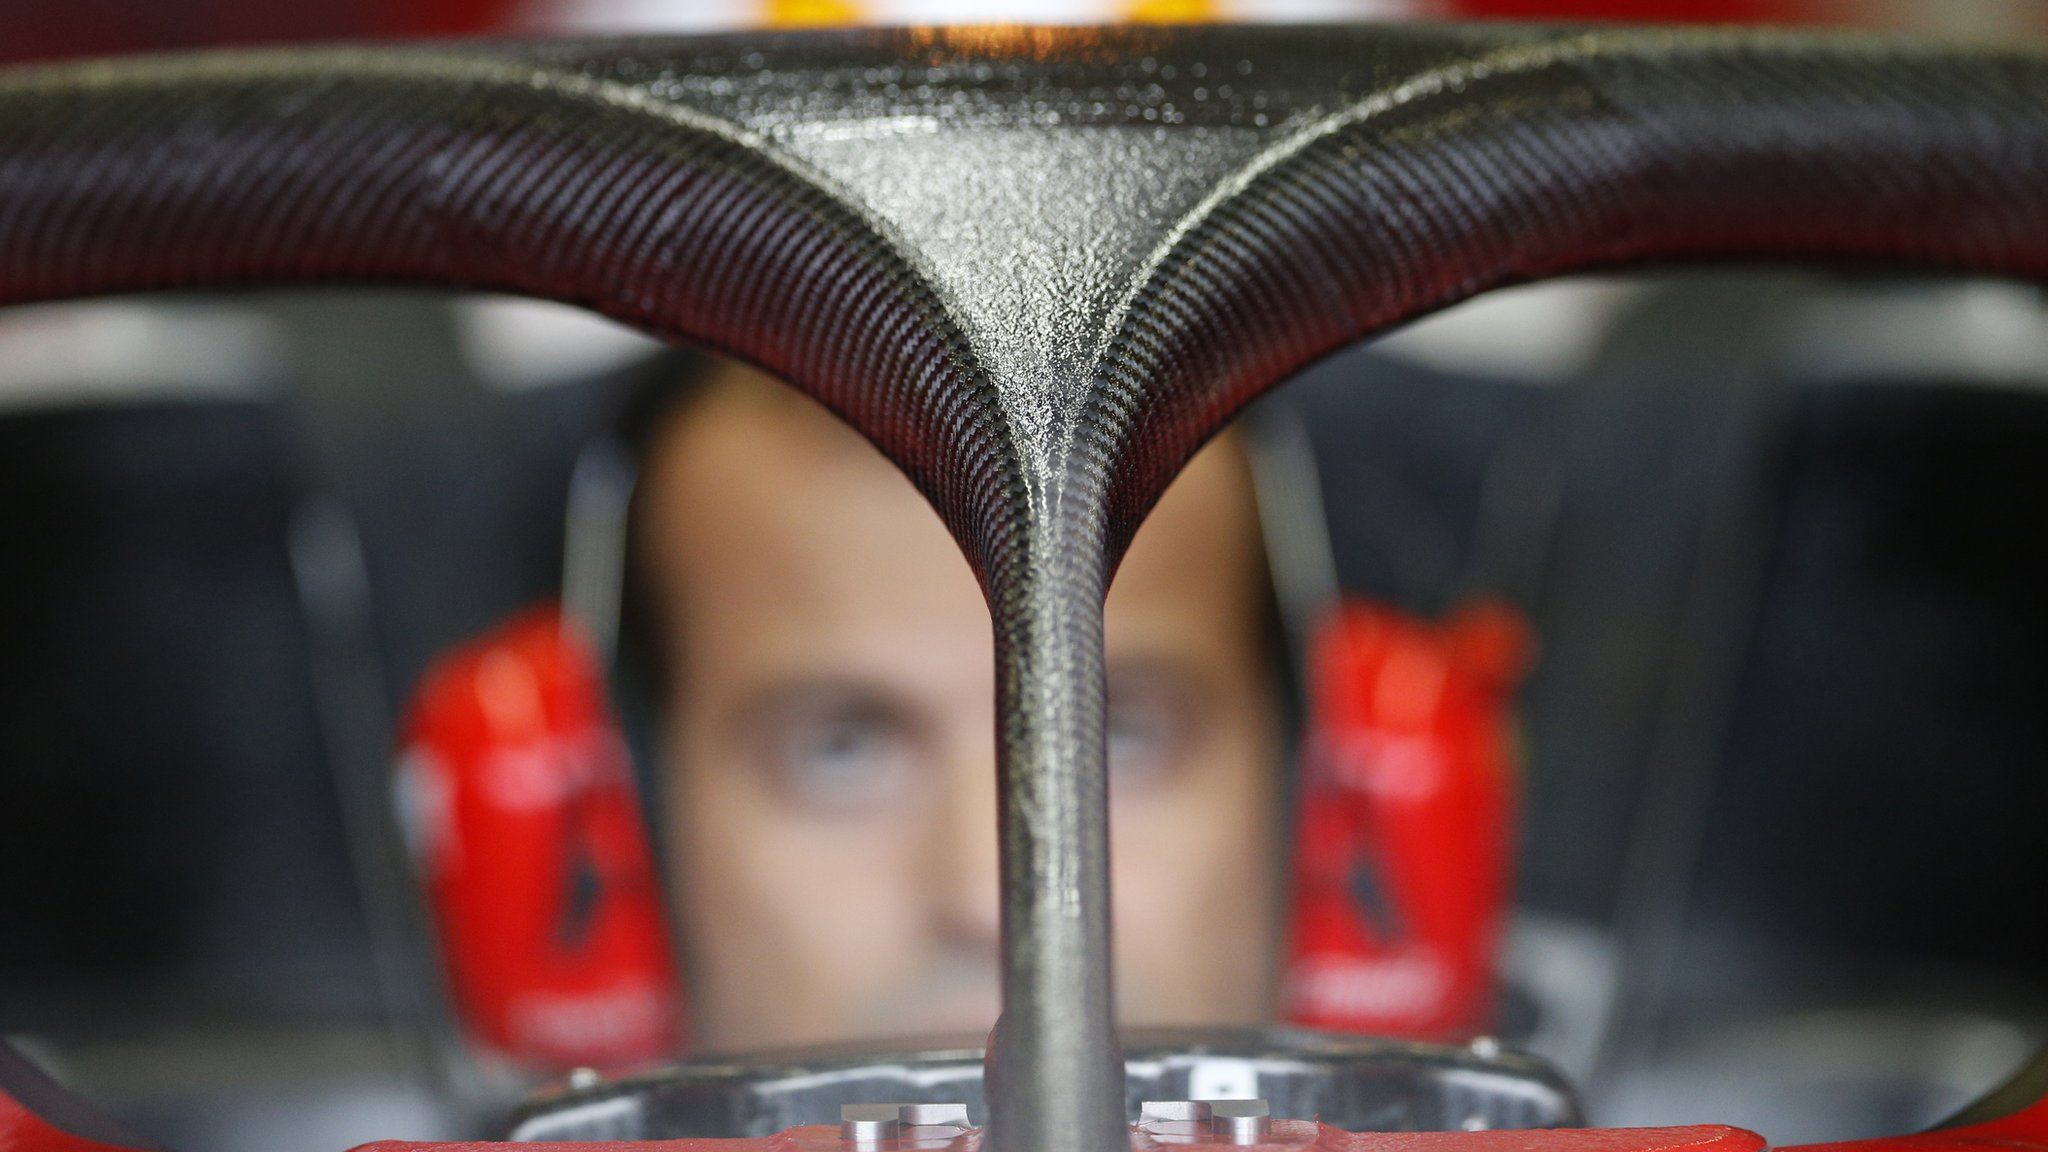 Ferrari test drive the halo